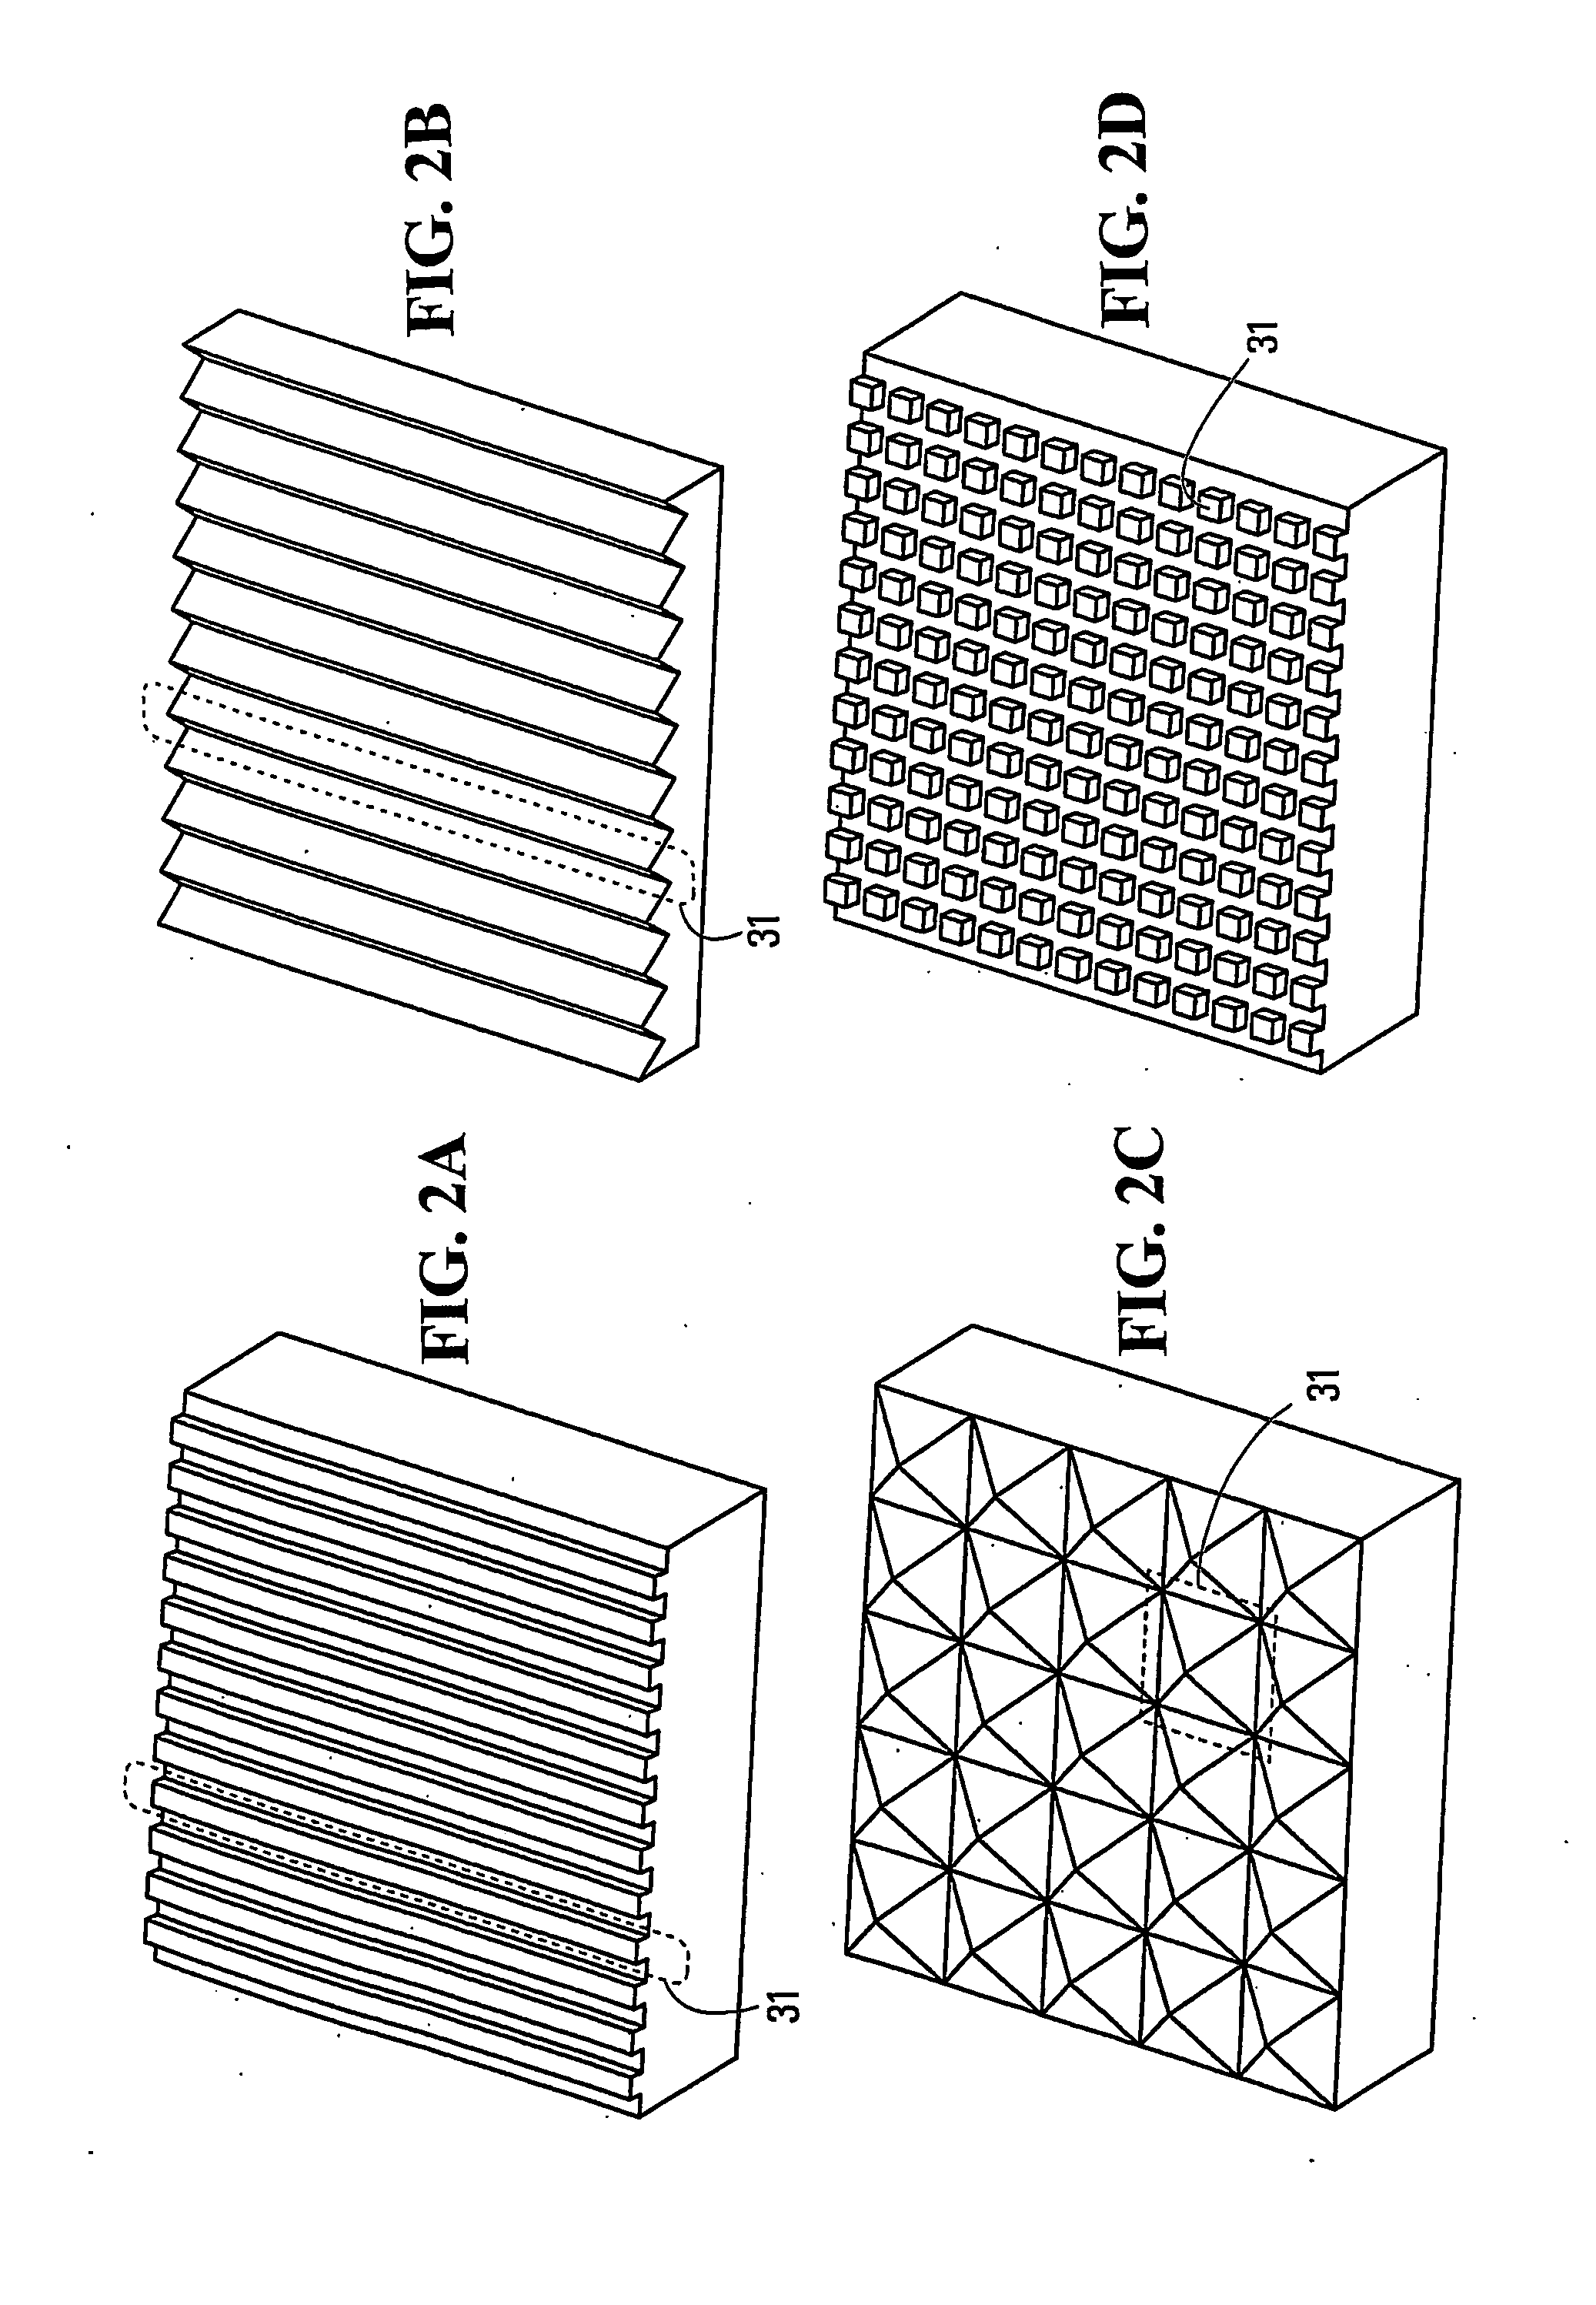 Microfluidic separation system